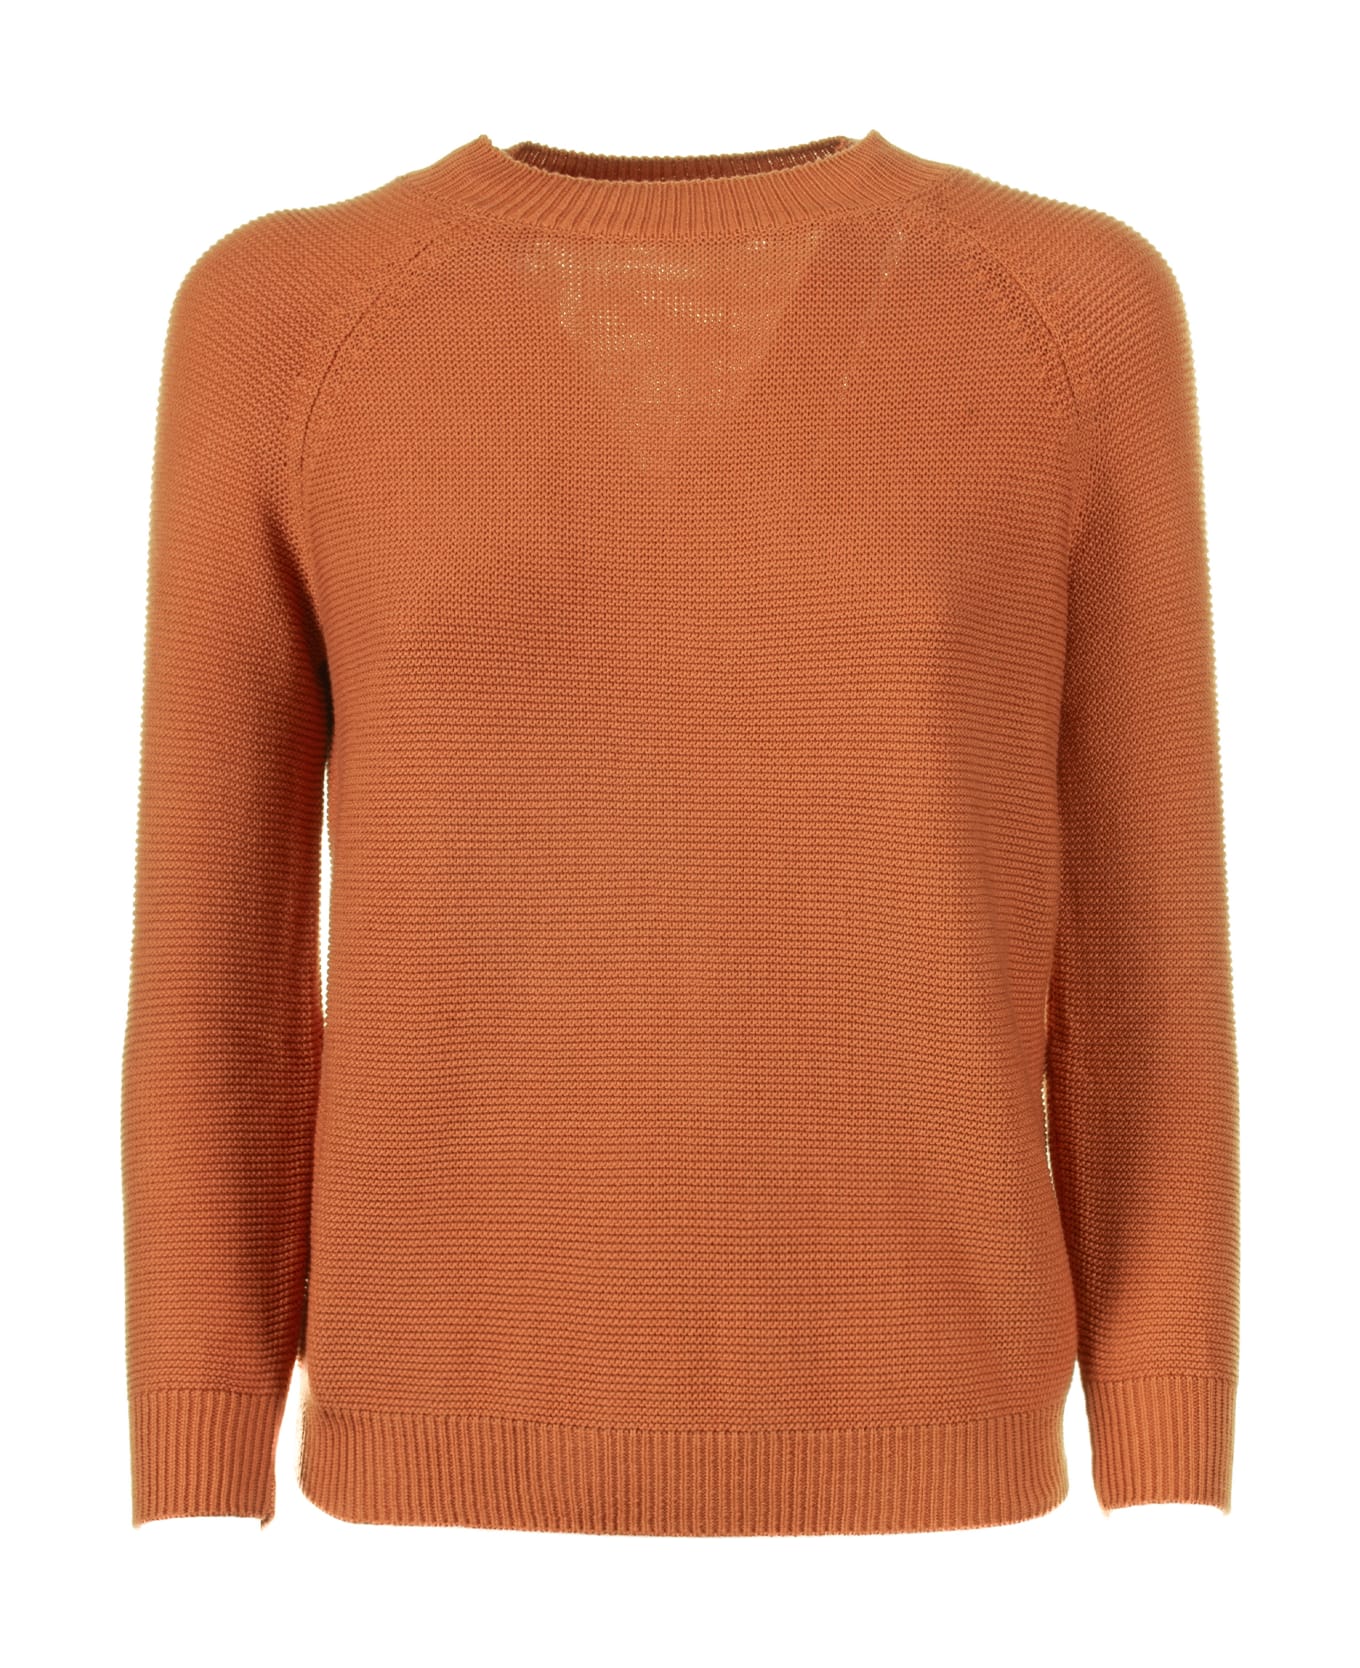 Weekend Max Mara Soft Orange Cotton Sweater - TULIPANO